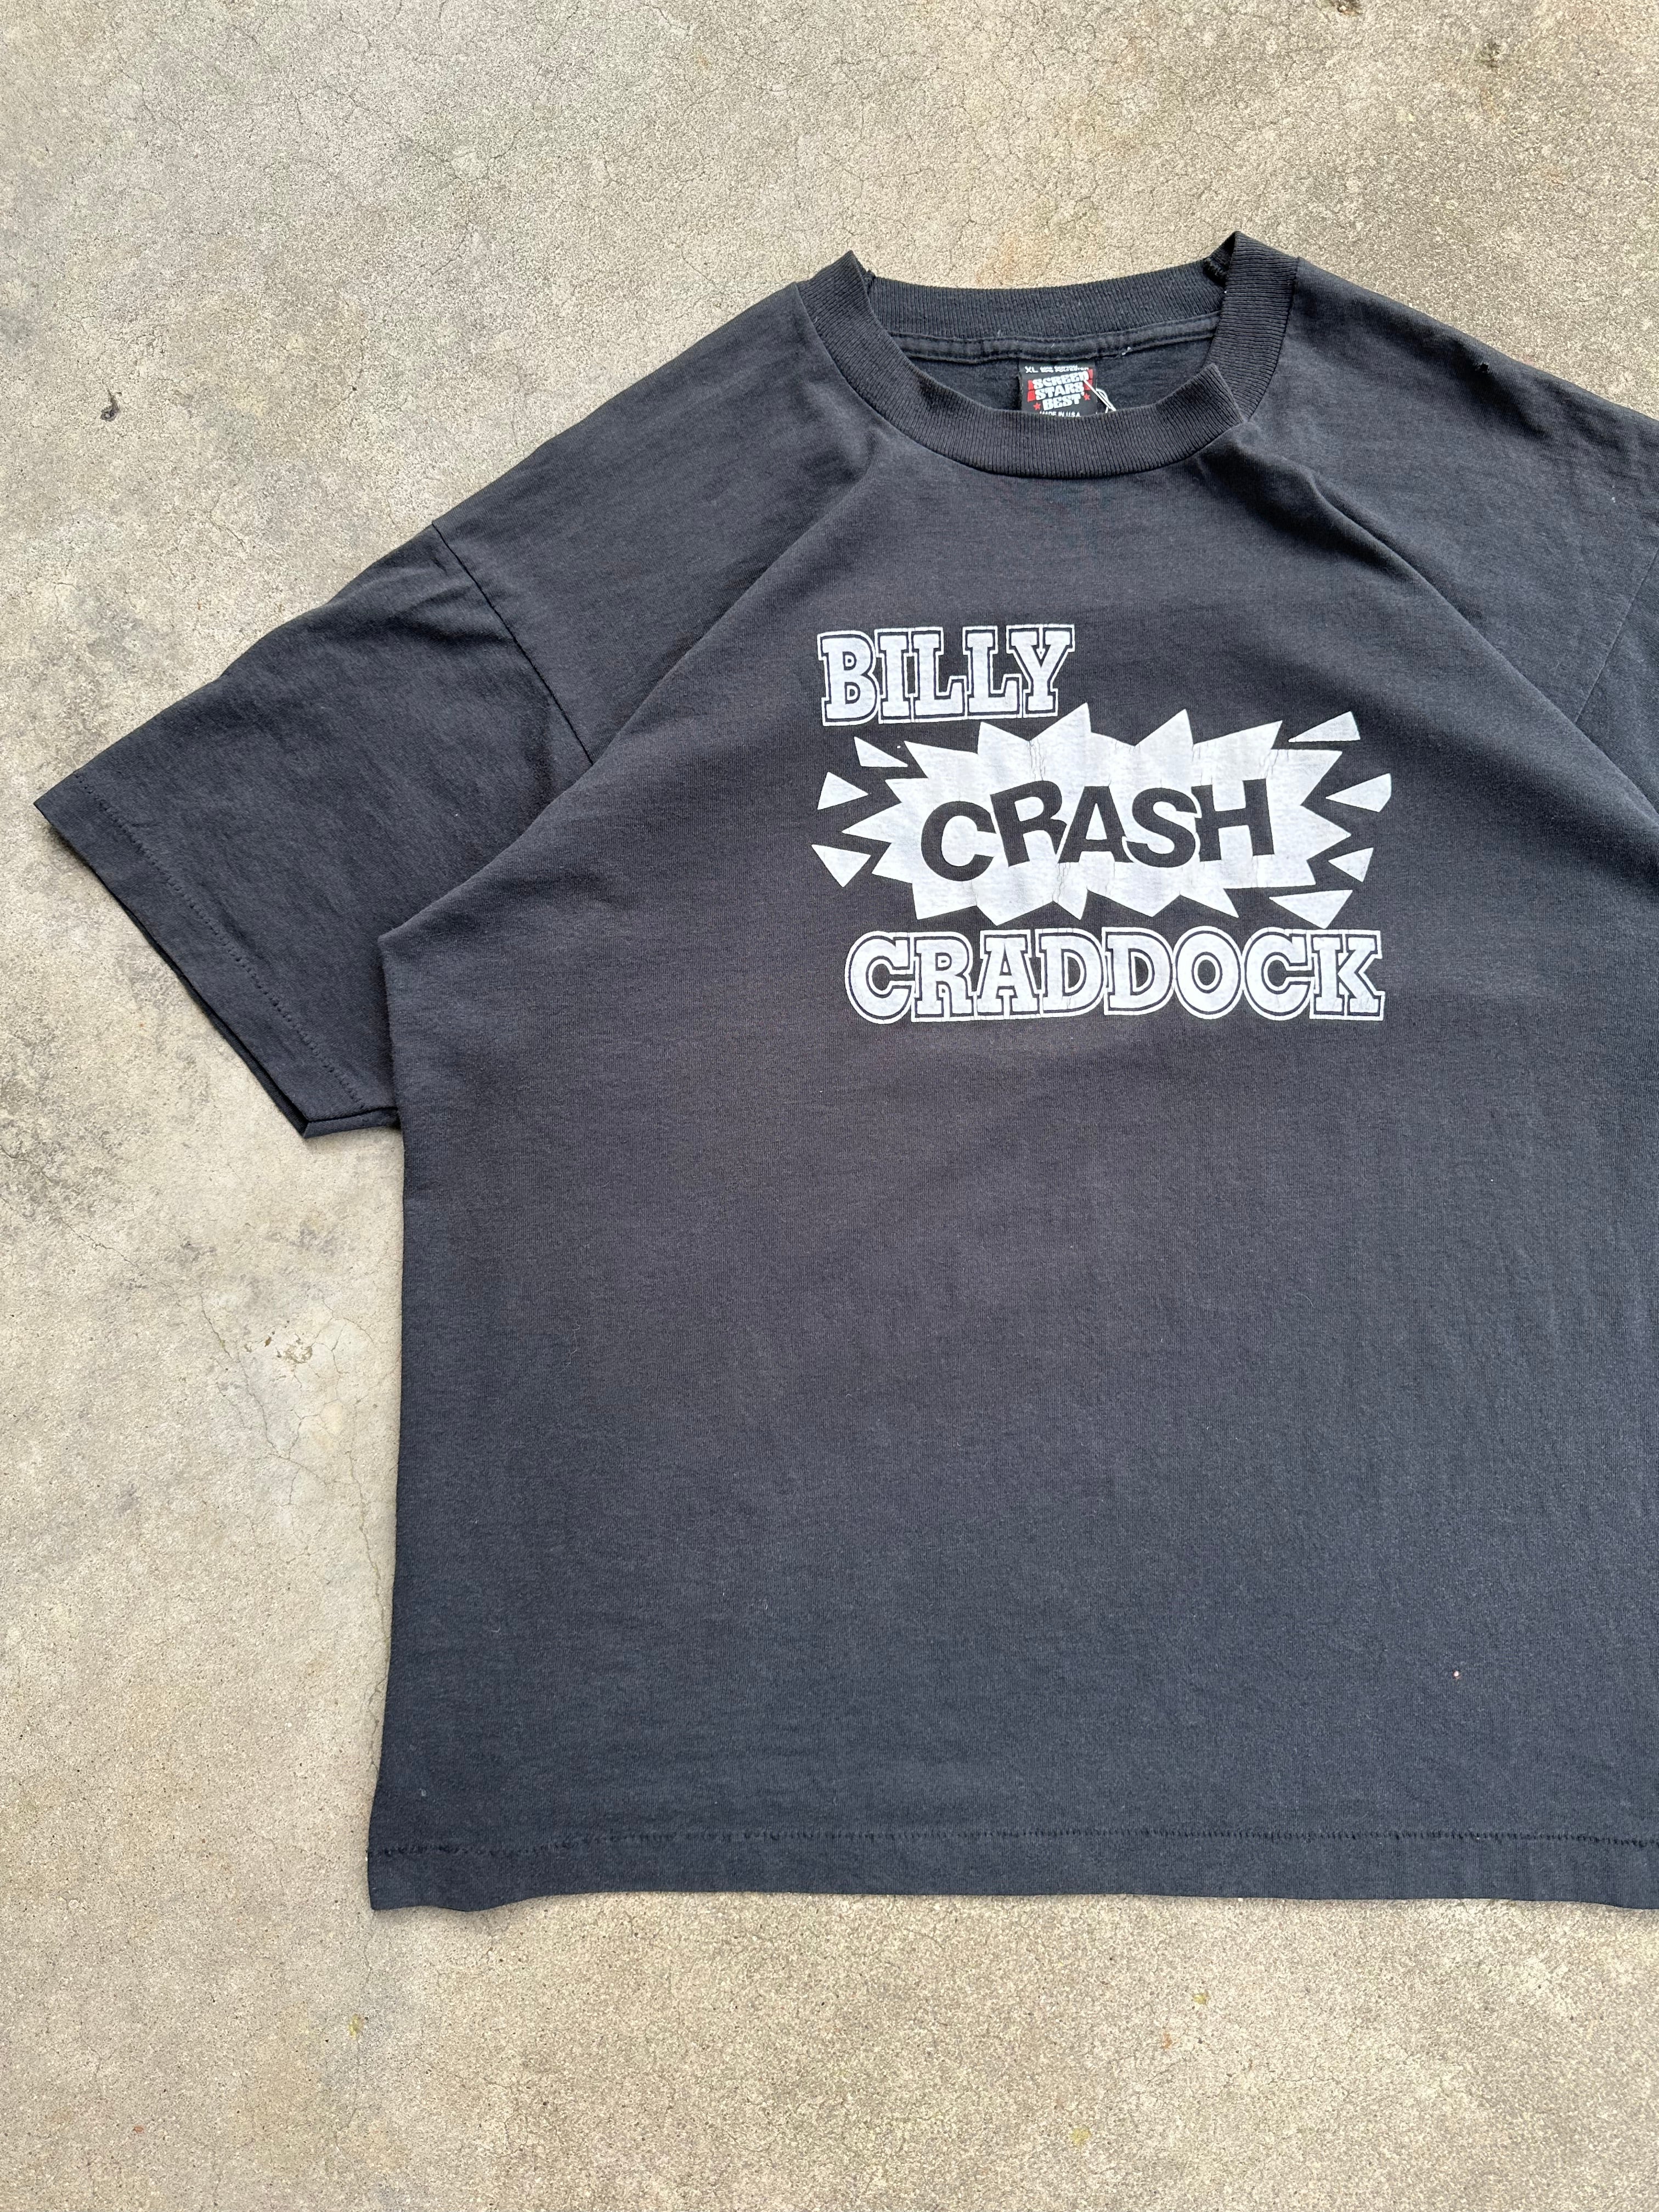 1990s Billy Crash Craddock T-Shirt (L/XL)